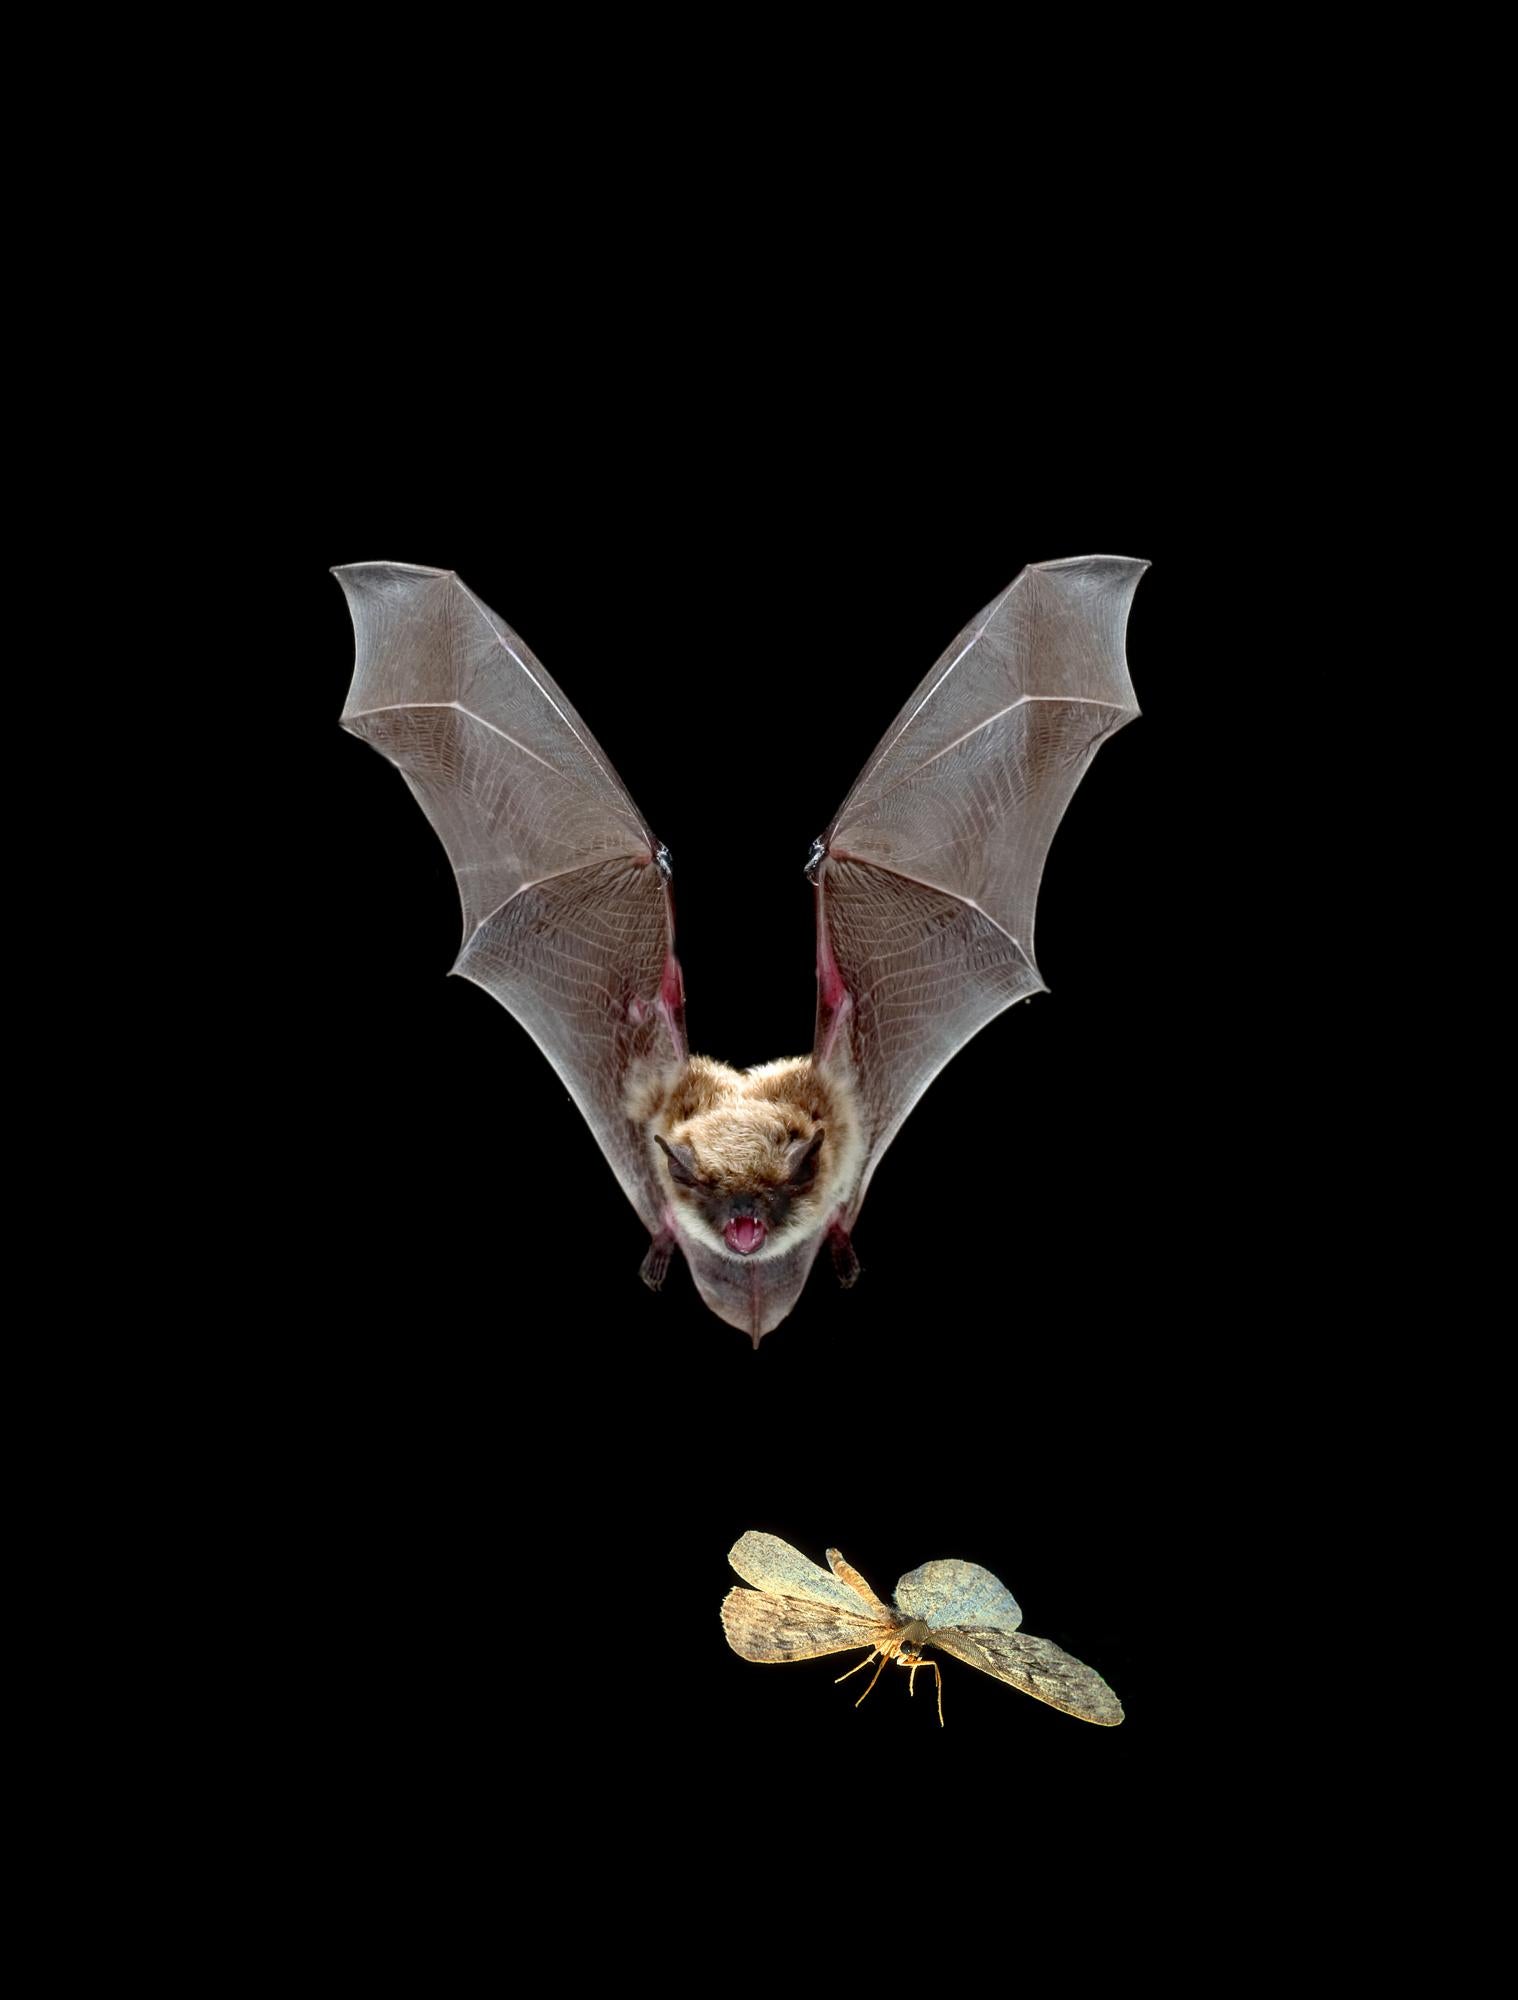 bat at night chasing flying insect